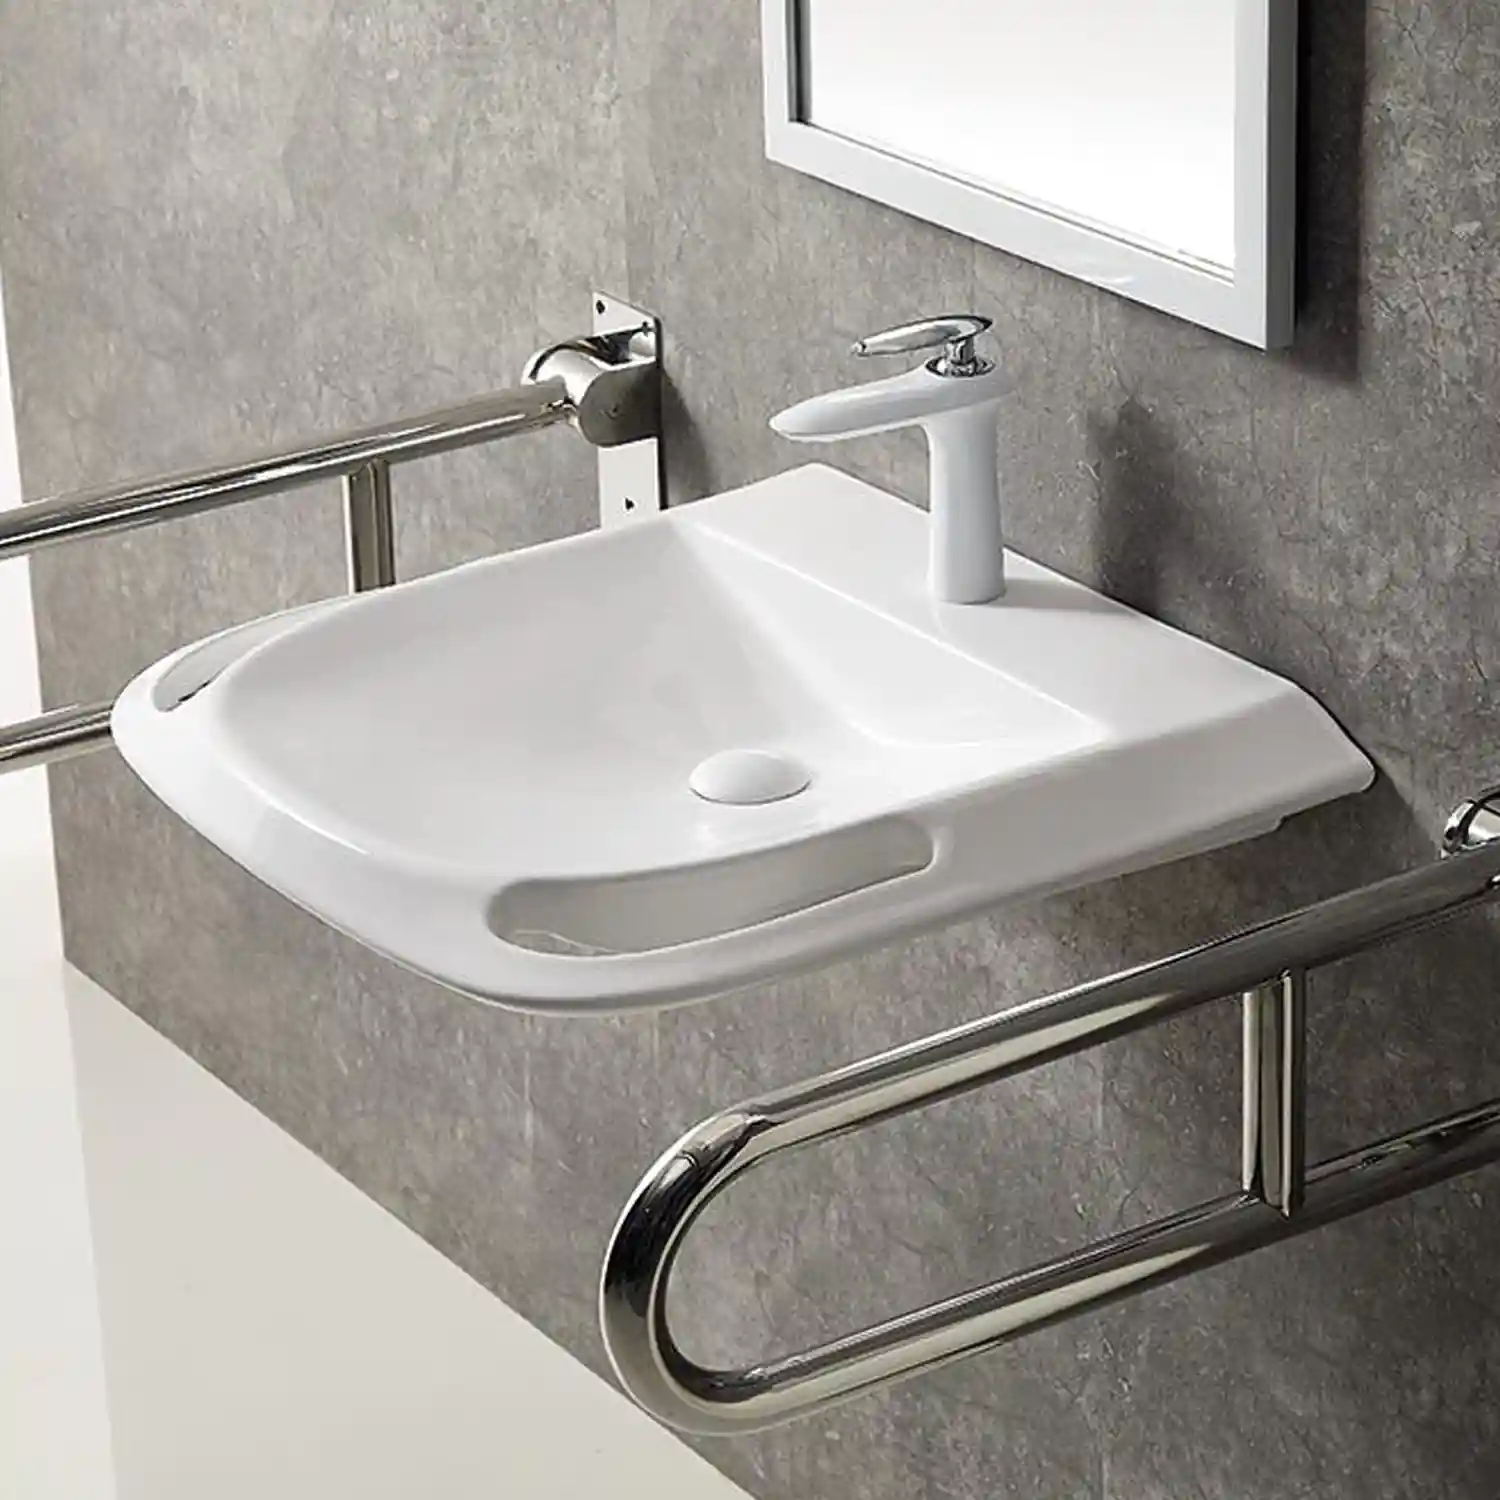 wall-hung ceramic handicapped wash basin for ADA bathroom, ada compliant wall-mount sink, wheelchair accessible basin